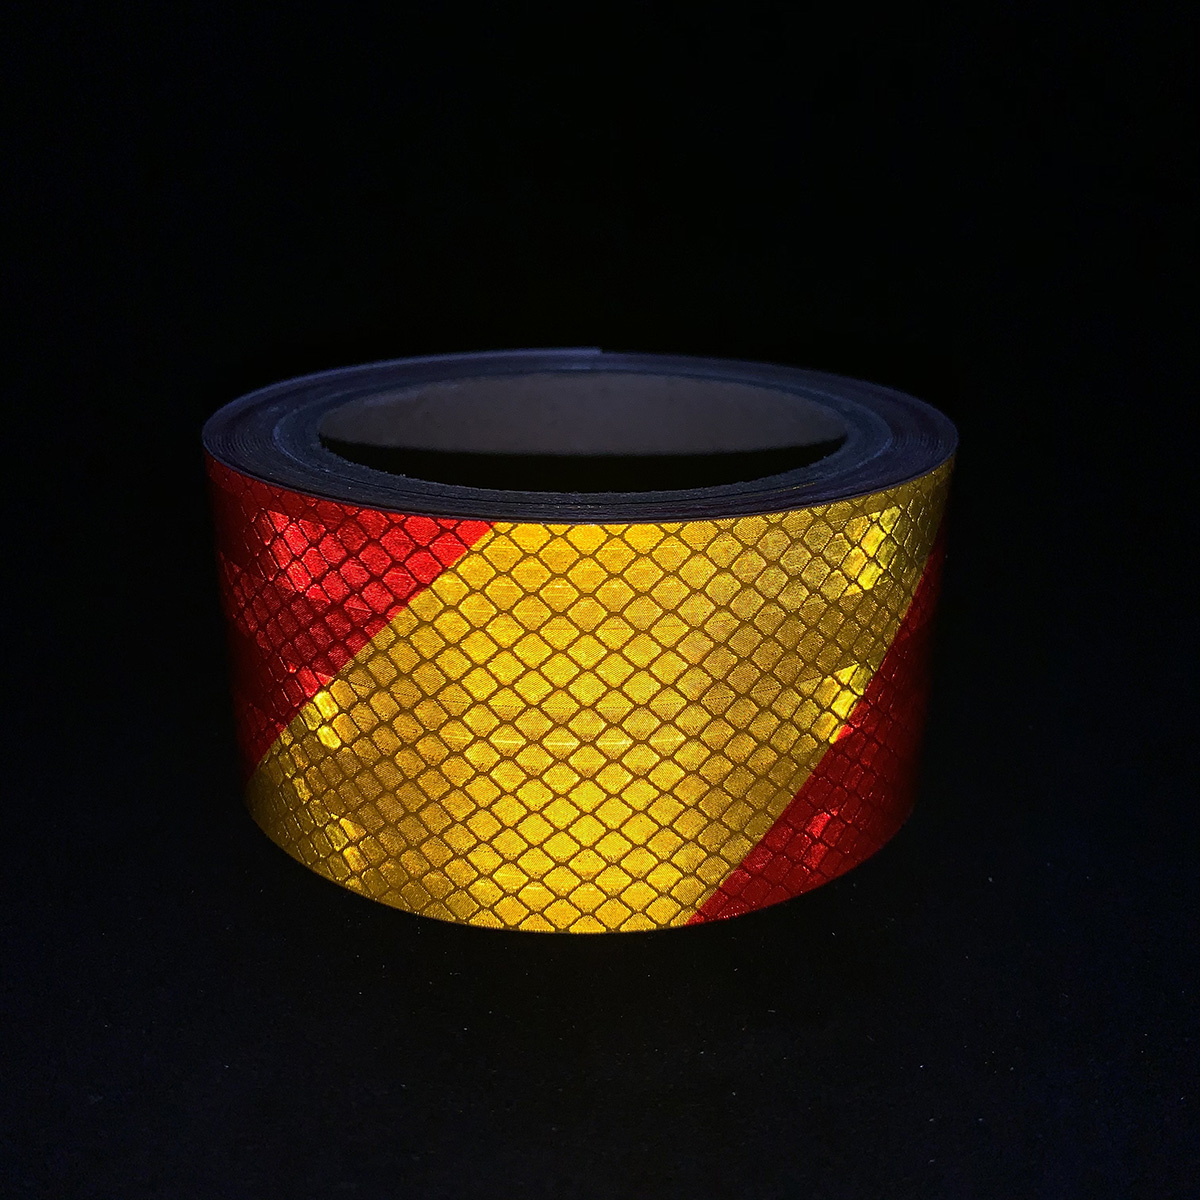 Cinta reflectante de sarga microprismática Golden+Red de 5 cm x 5 m para el tráfico